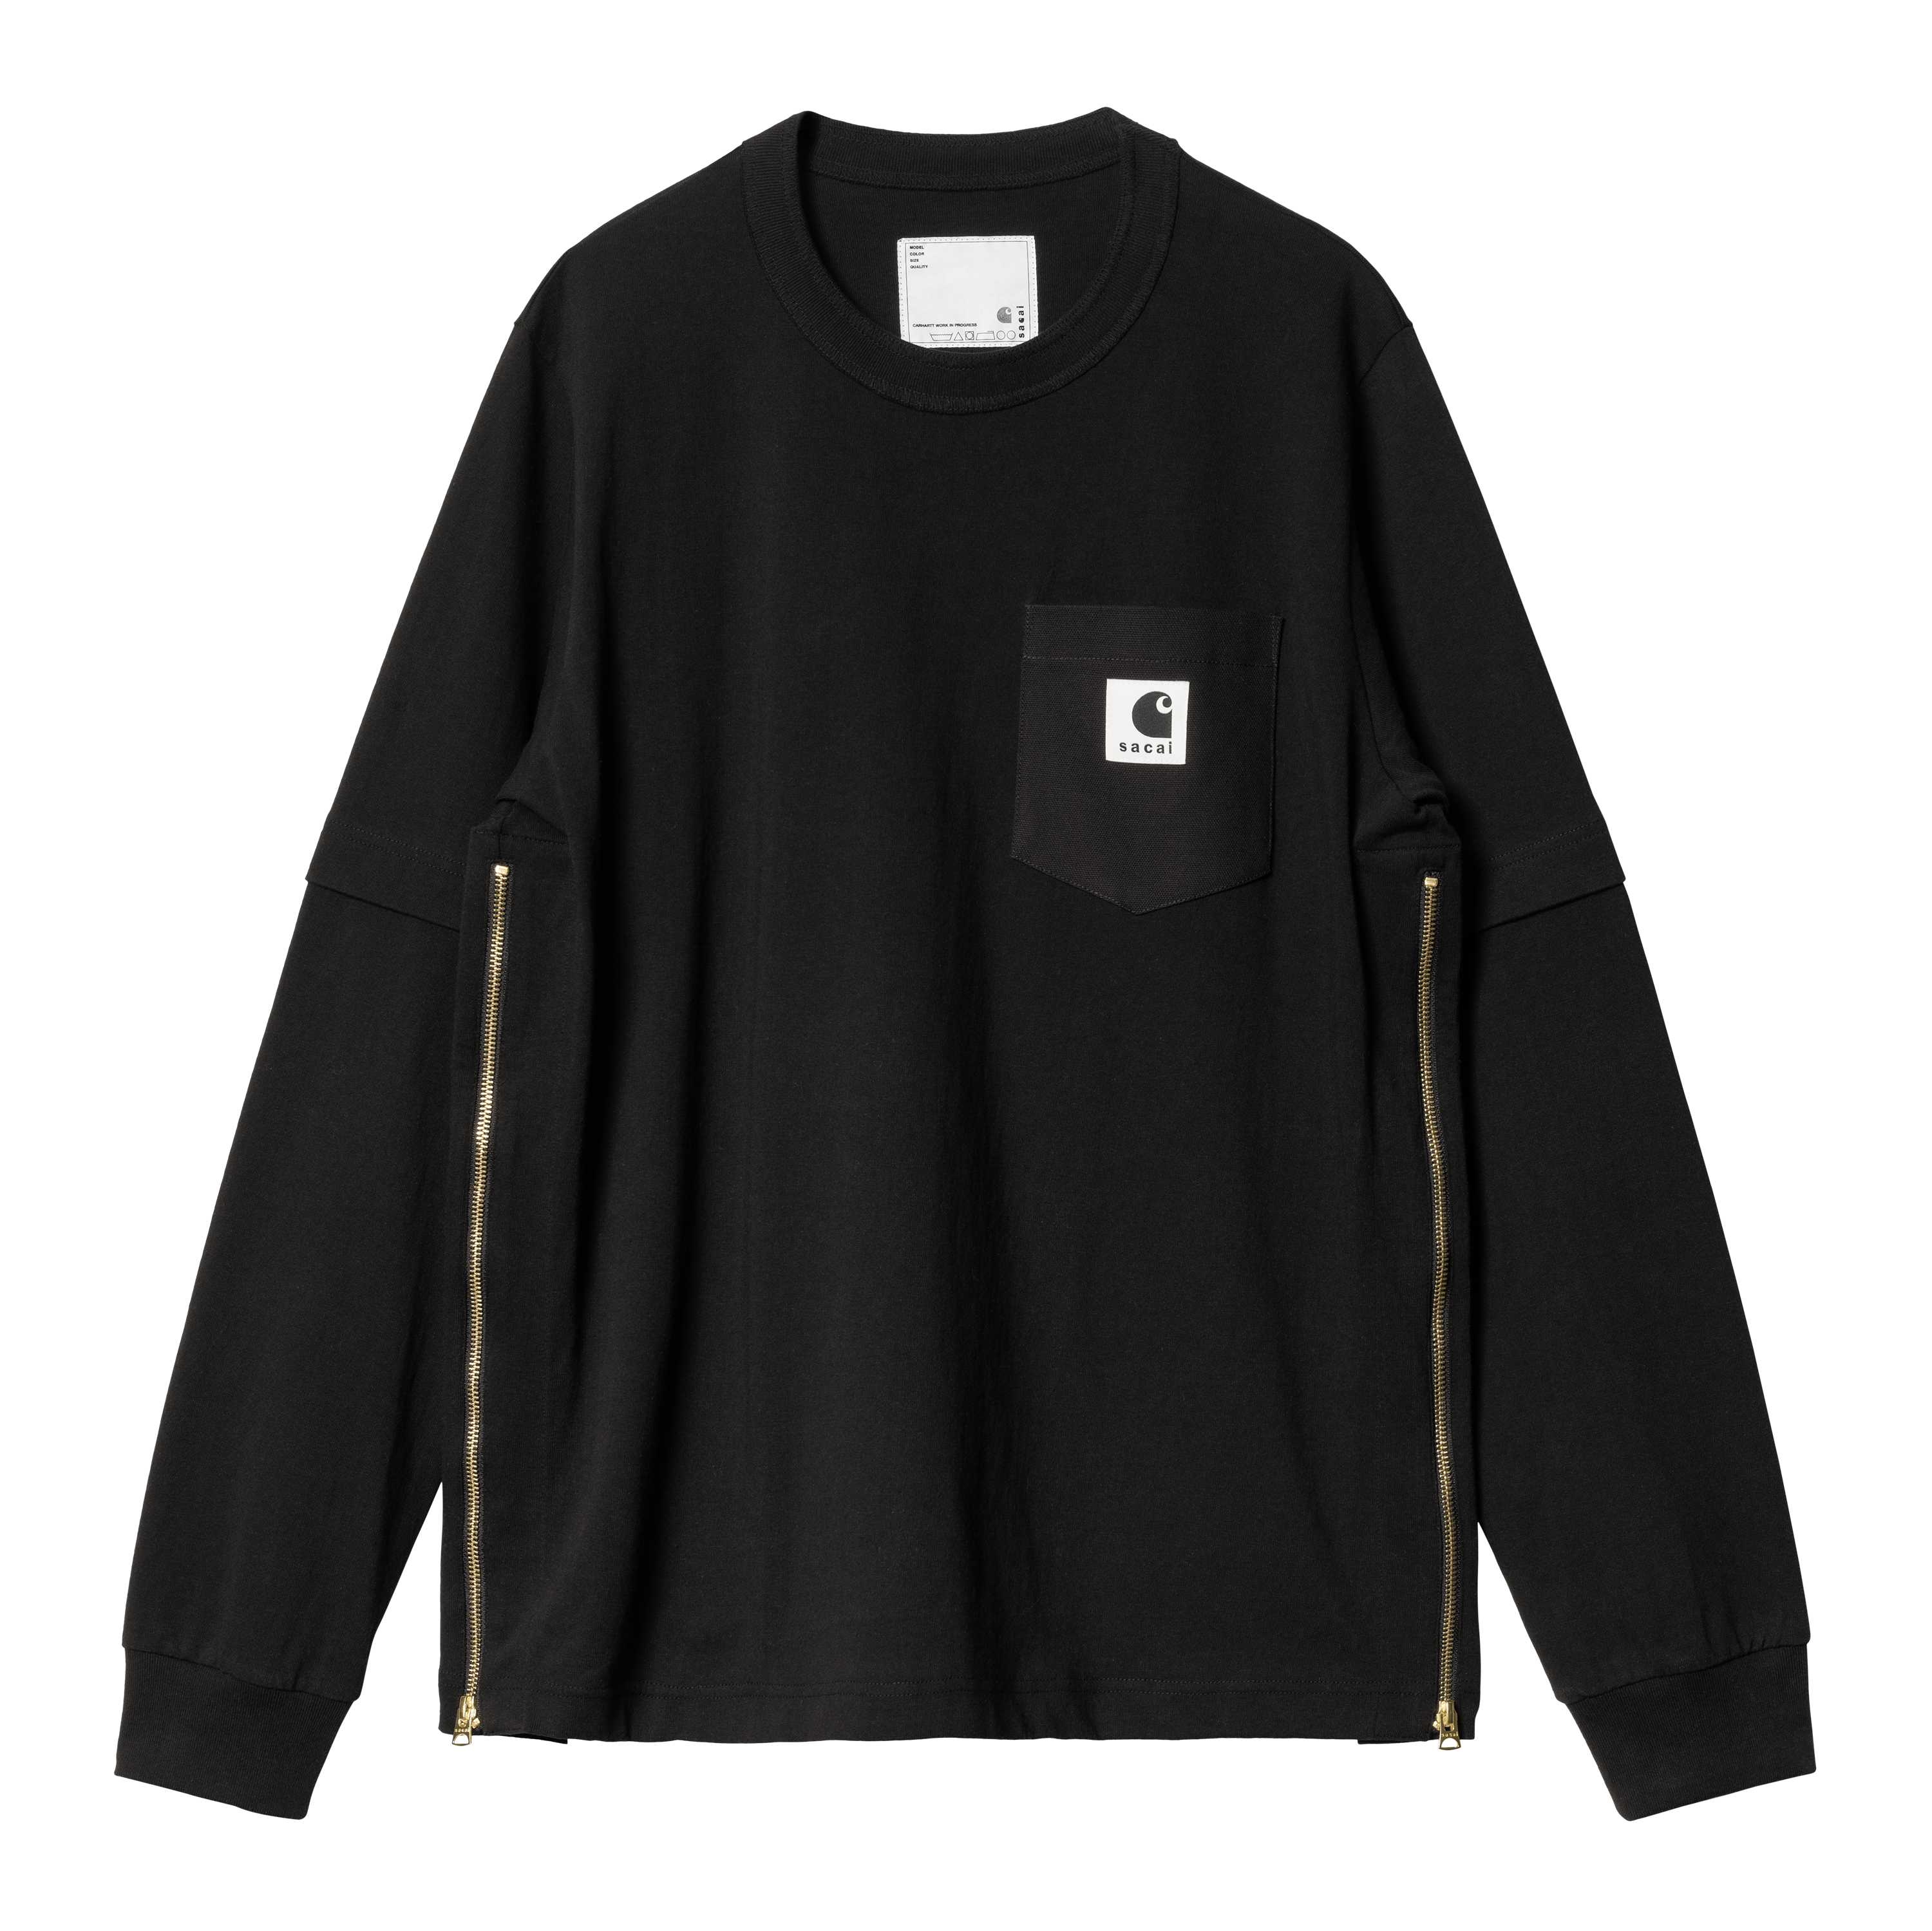 Carhartt WIP sacai x Carhartt WIP Long Sleeve T-Shirt in Schwarz